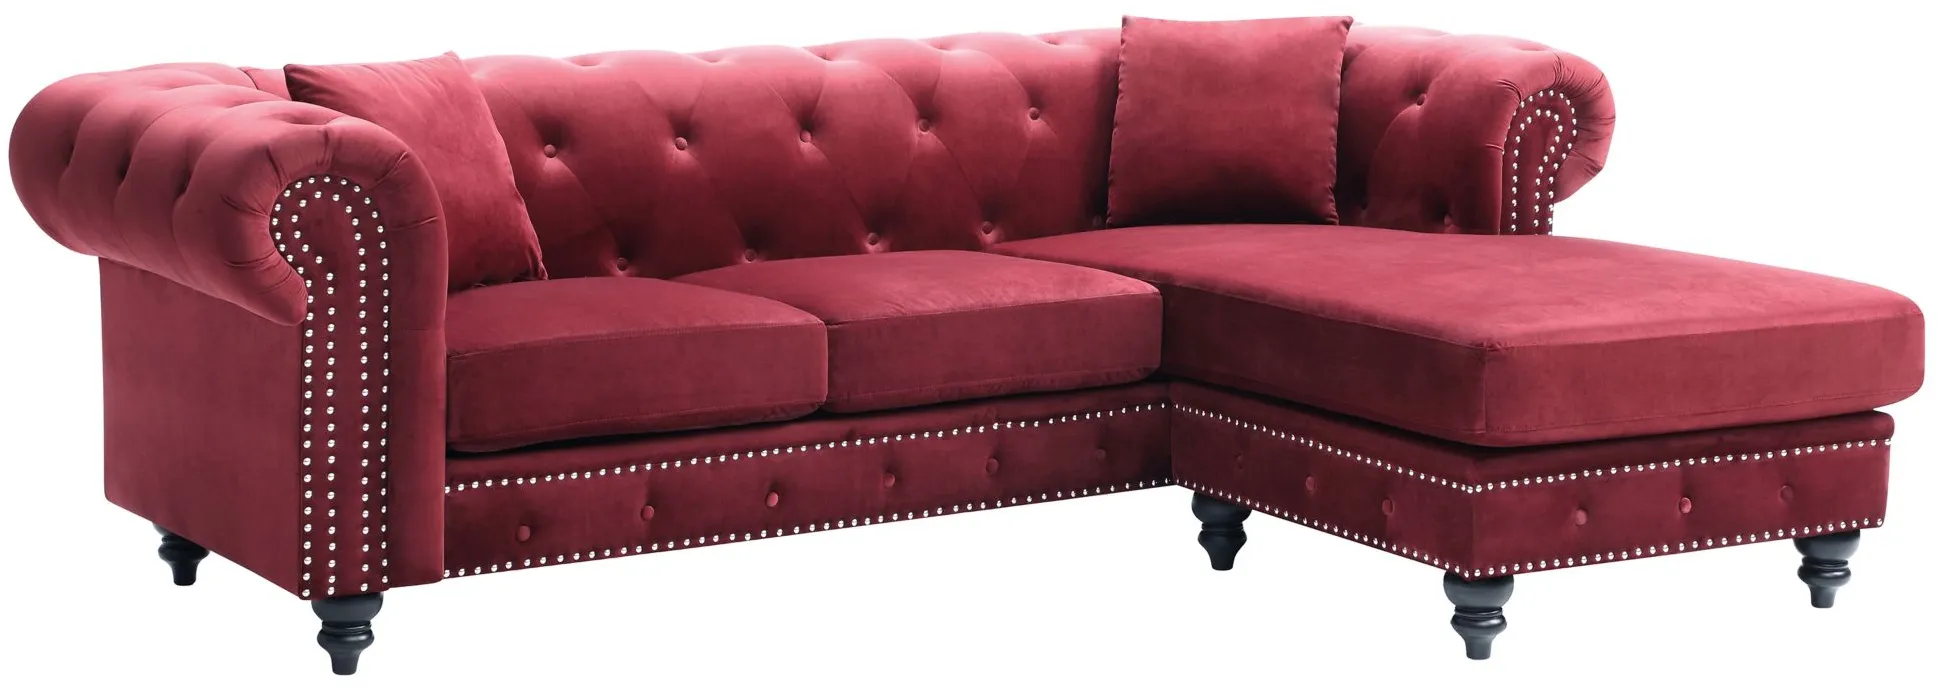 Glory Furniture Nola 2-pc. Sectional Sofa in Burgundy by Glory Furniture